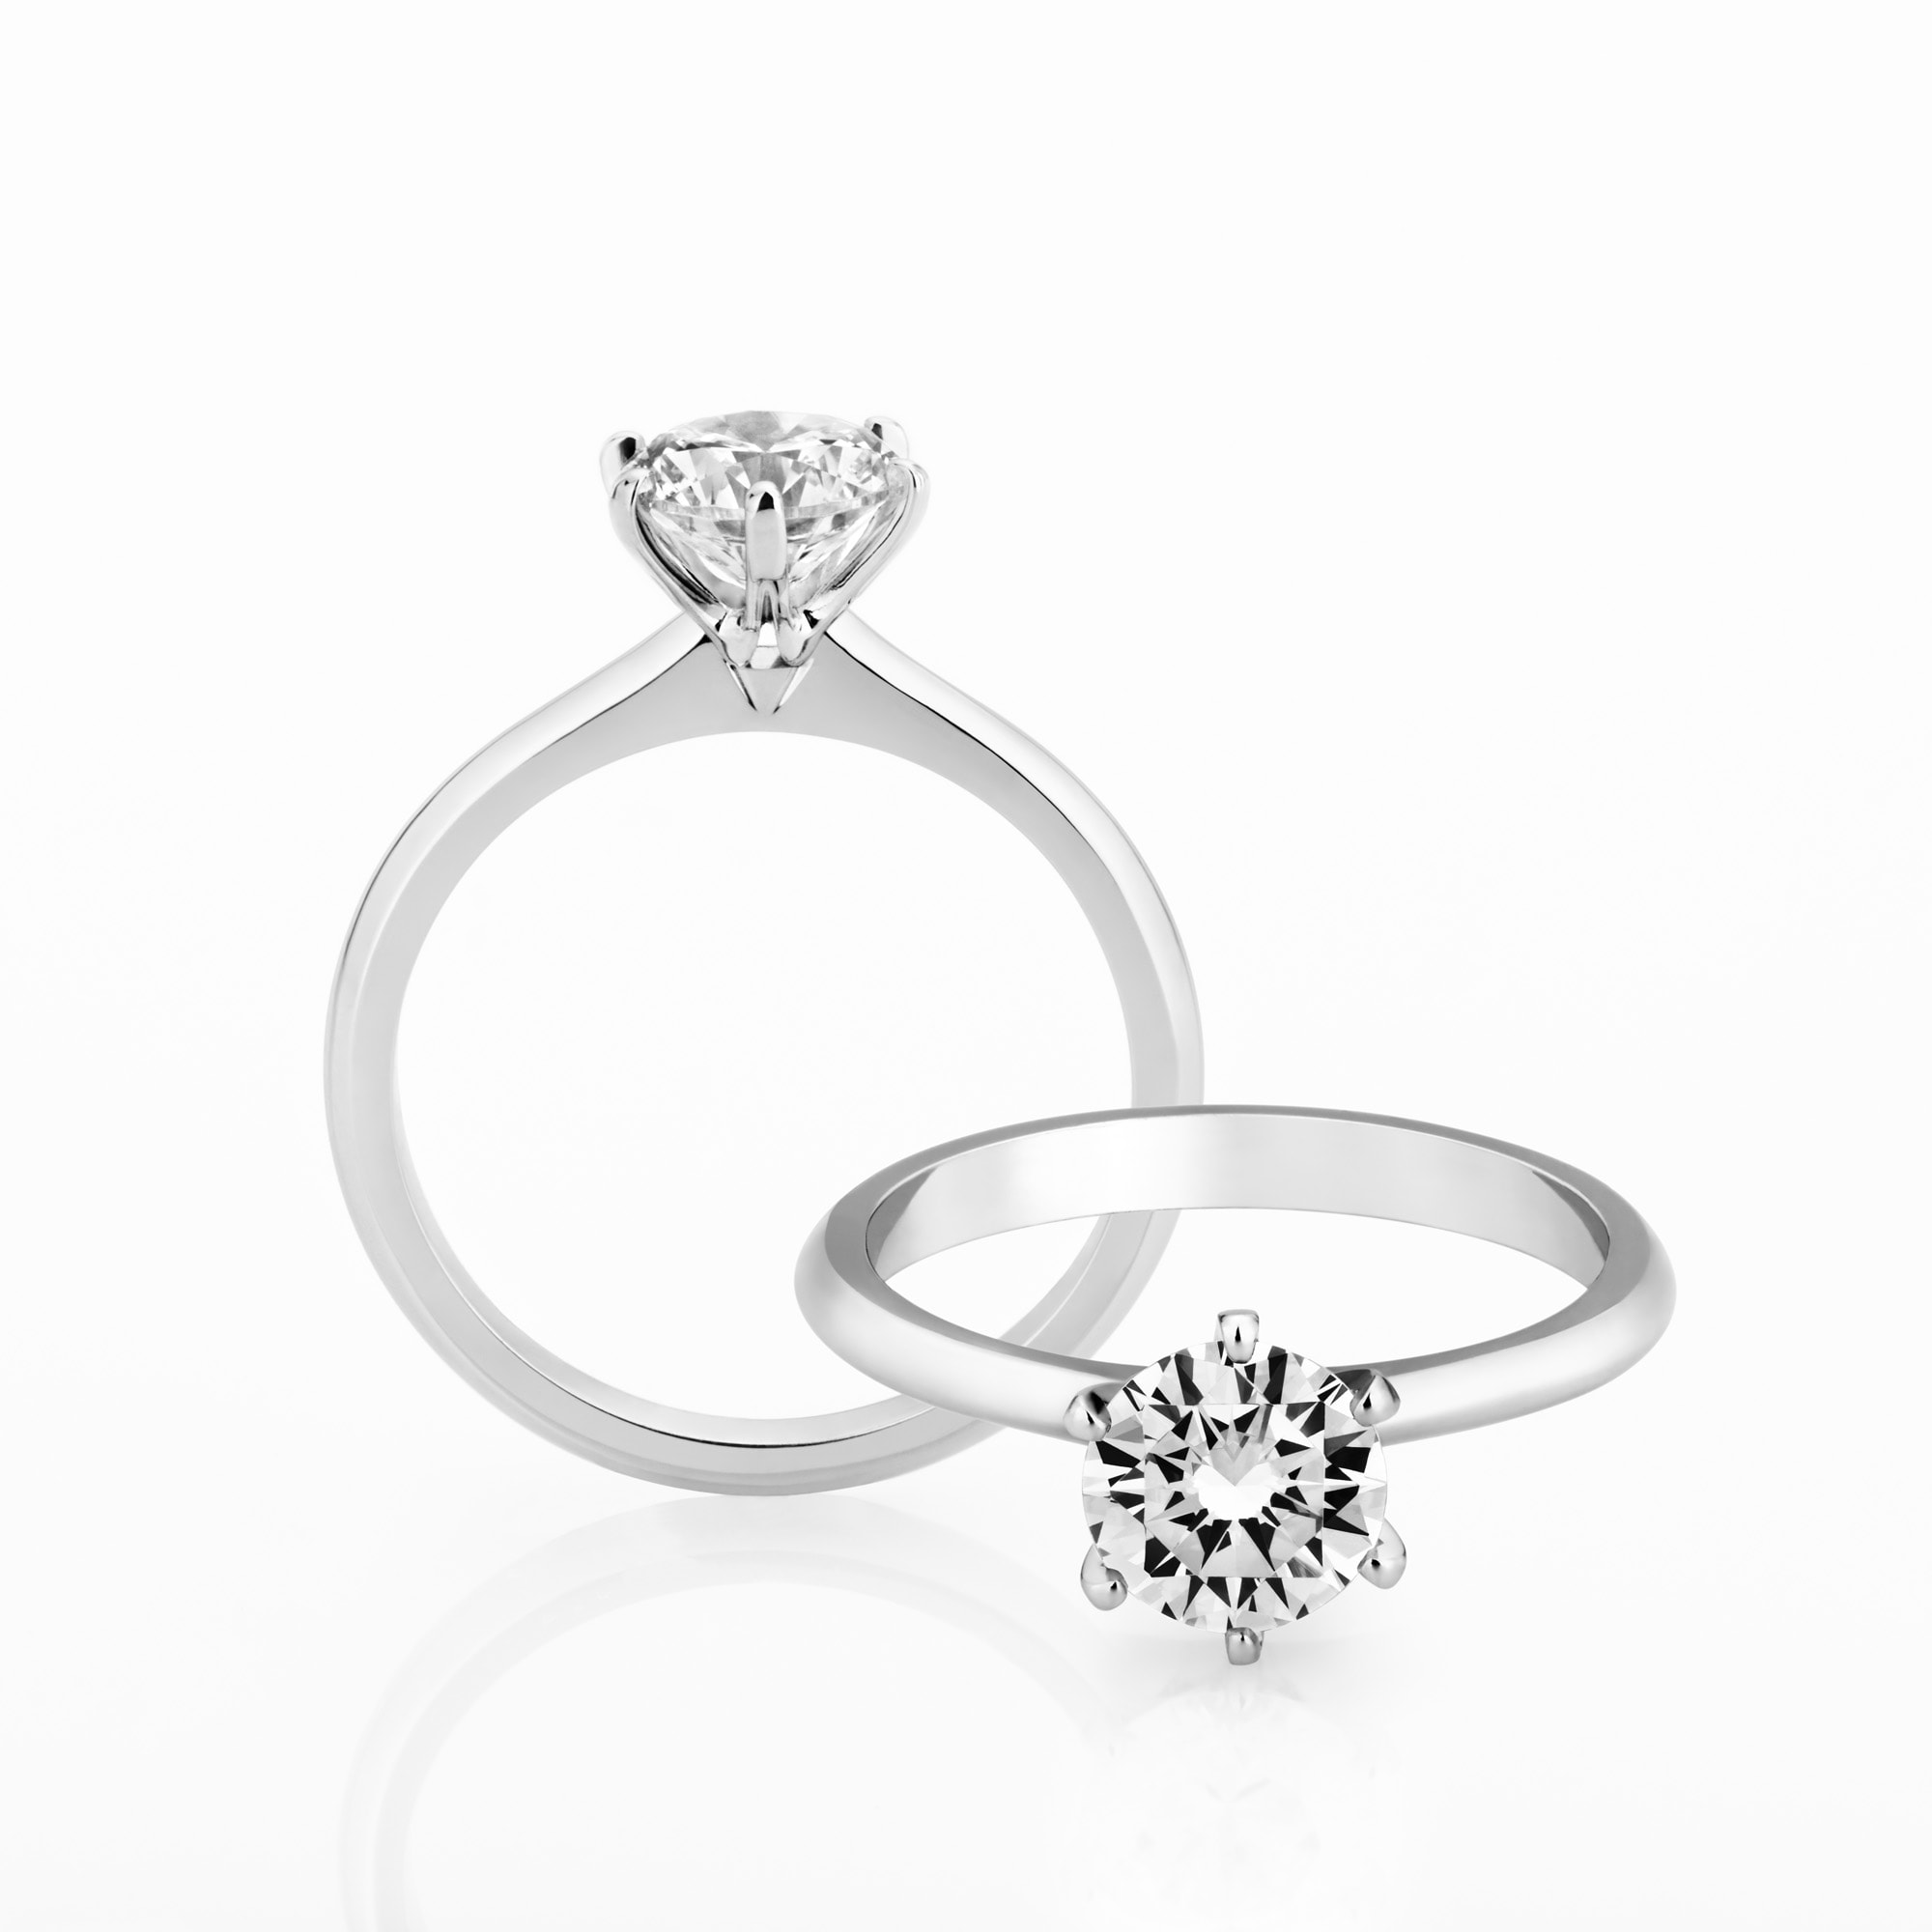 Vela diamond solitaire ring